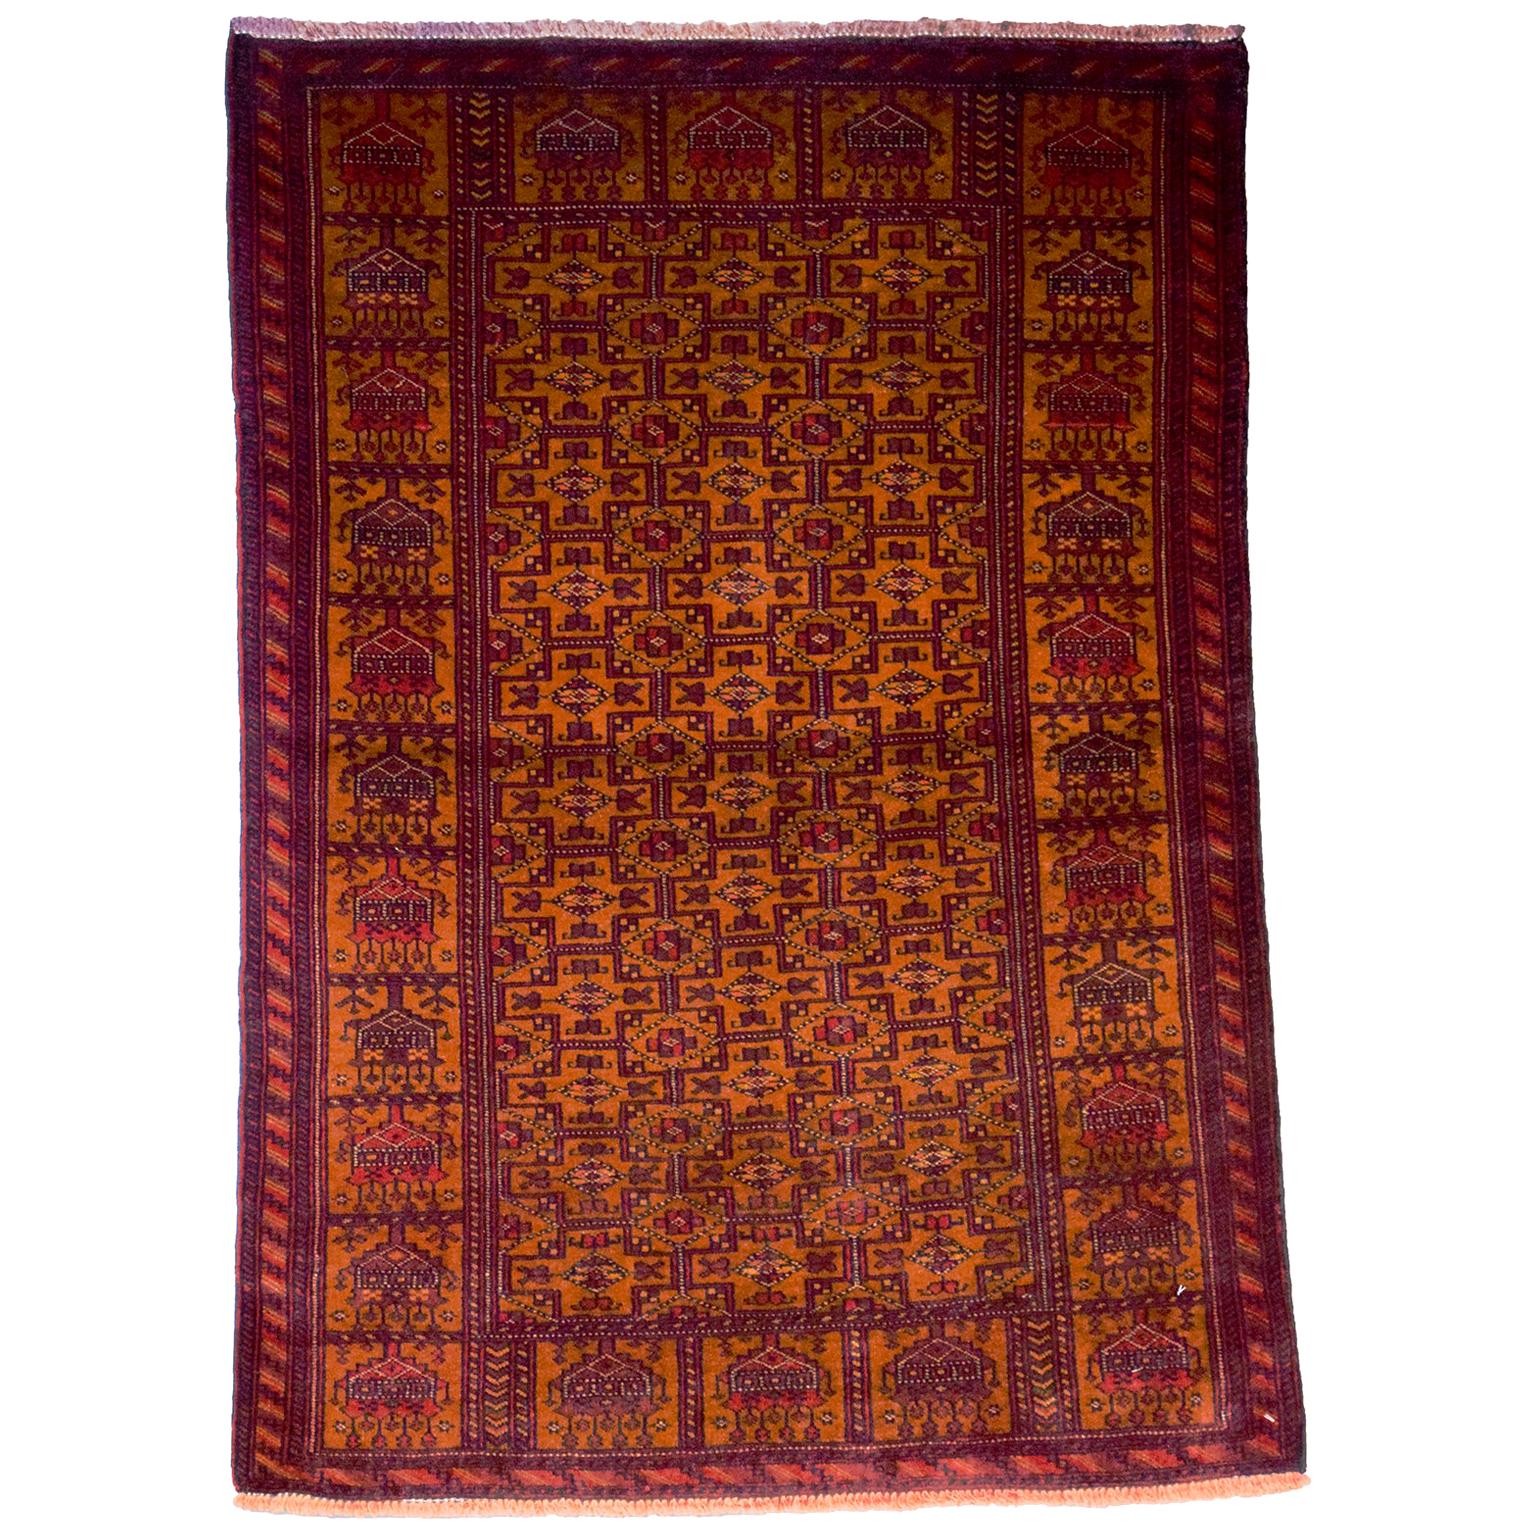 Vintage Persian Balouchi Rug, 3’ x 5’